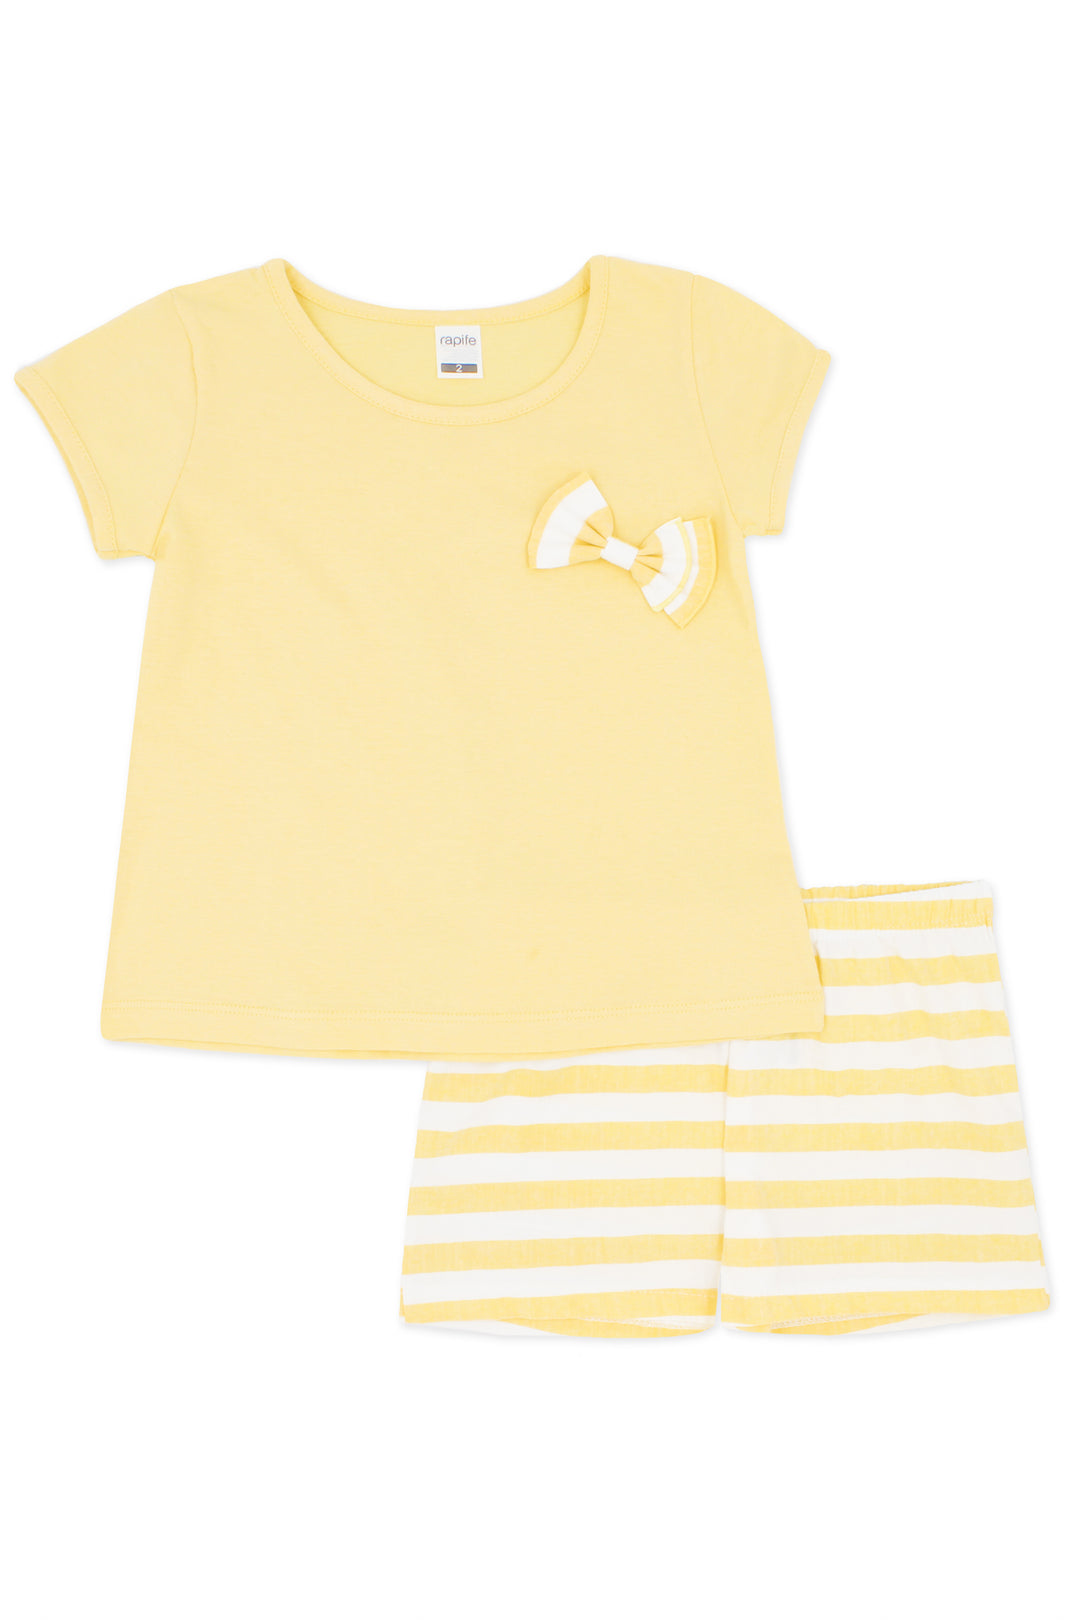 Rapife "Arianna" Pale Yellow Stripe T-Shirt & Shorts | Millie and John